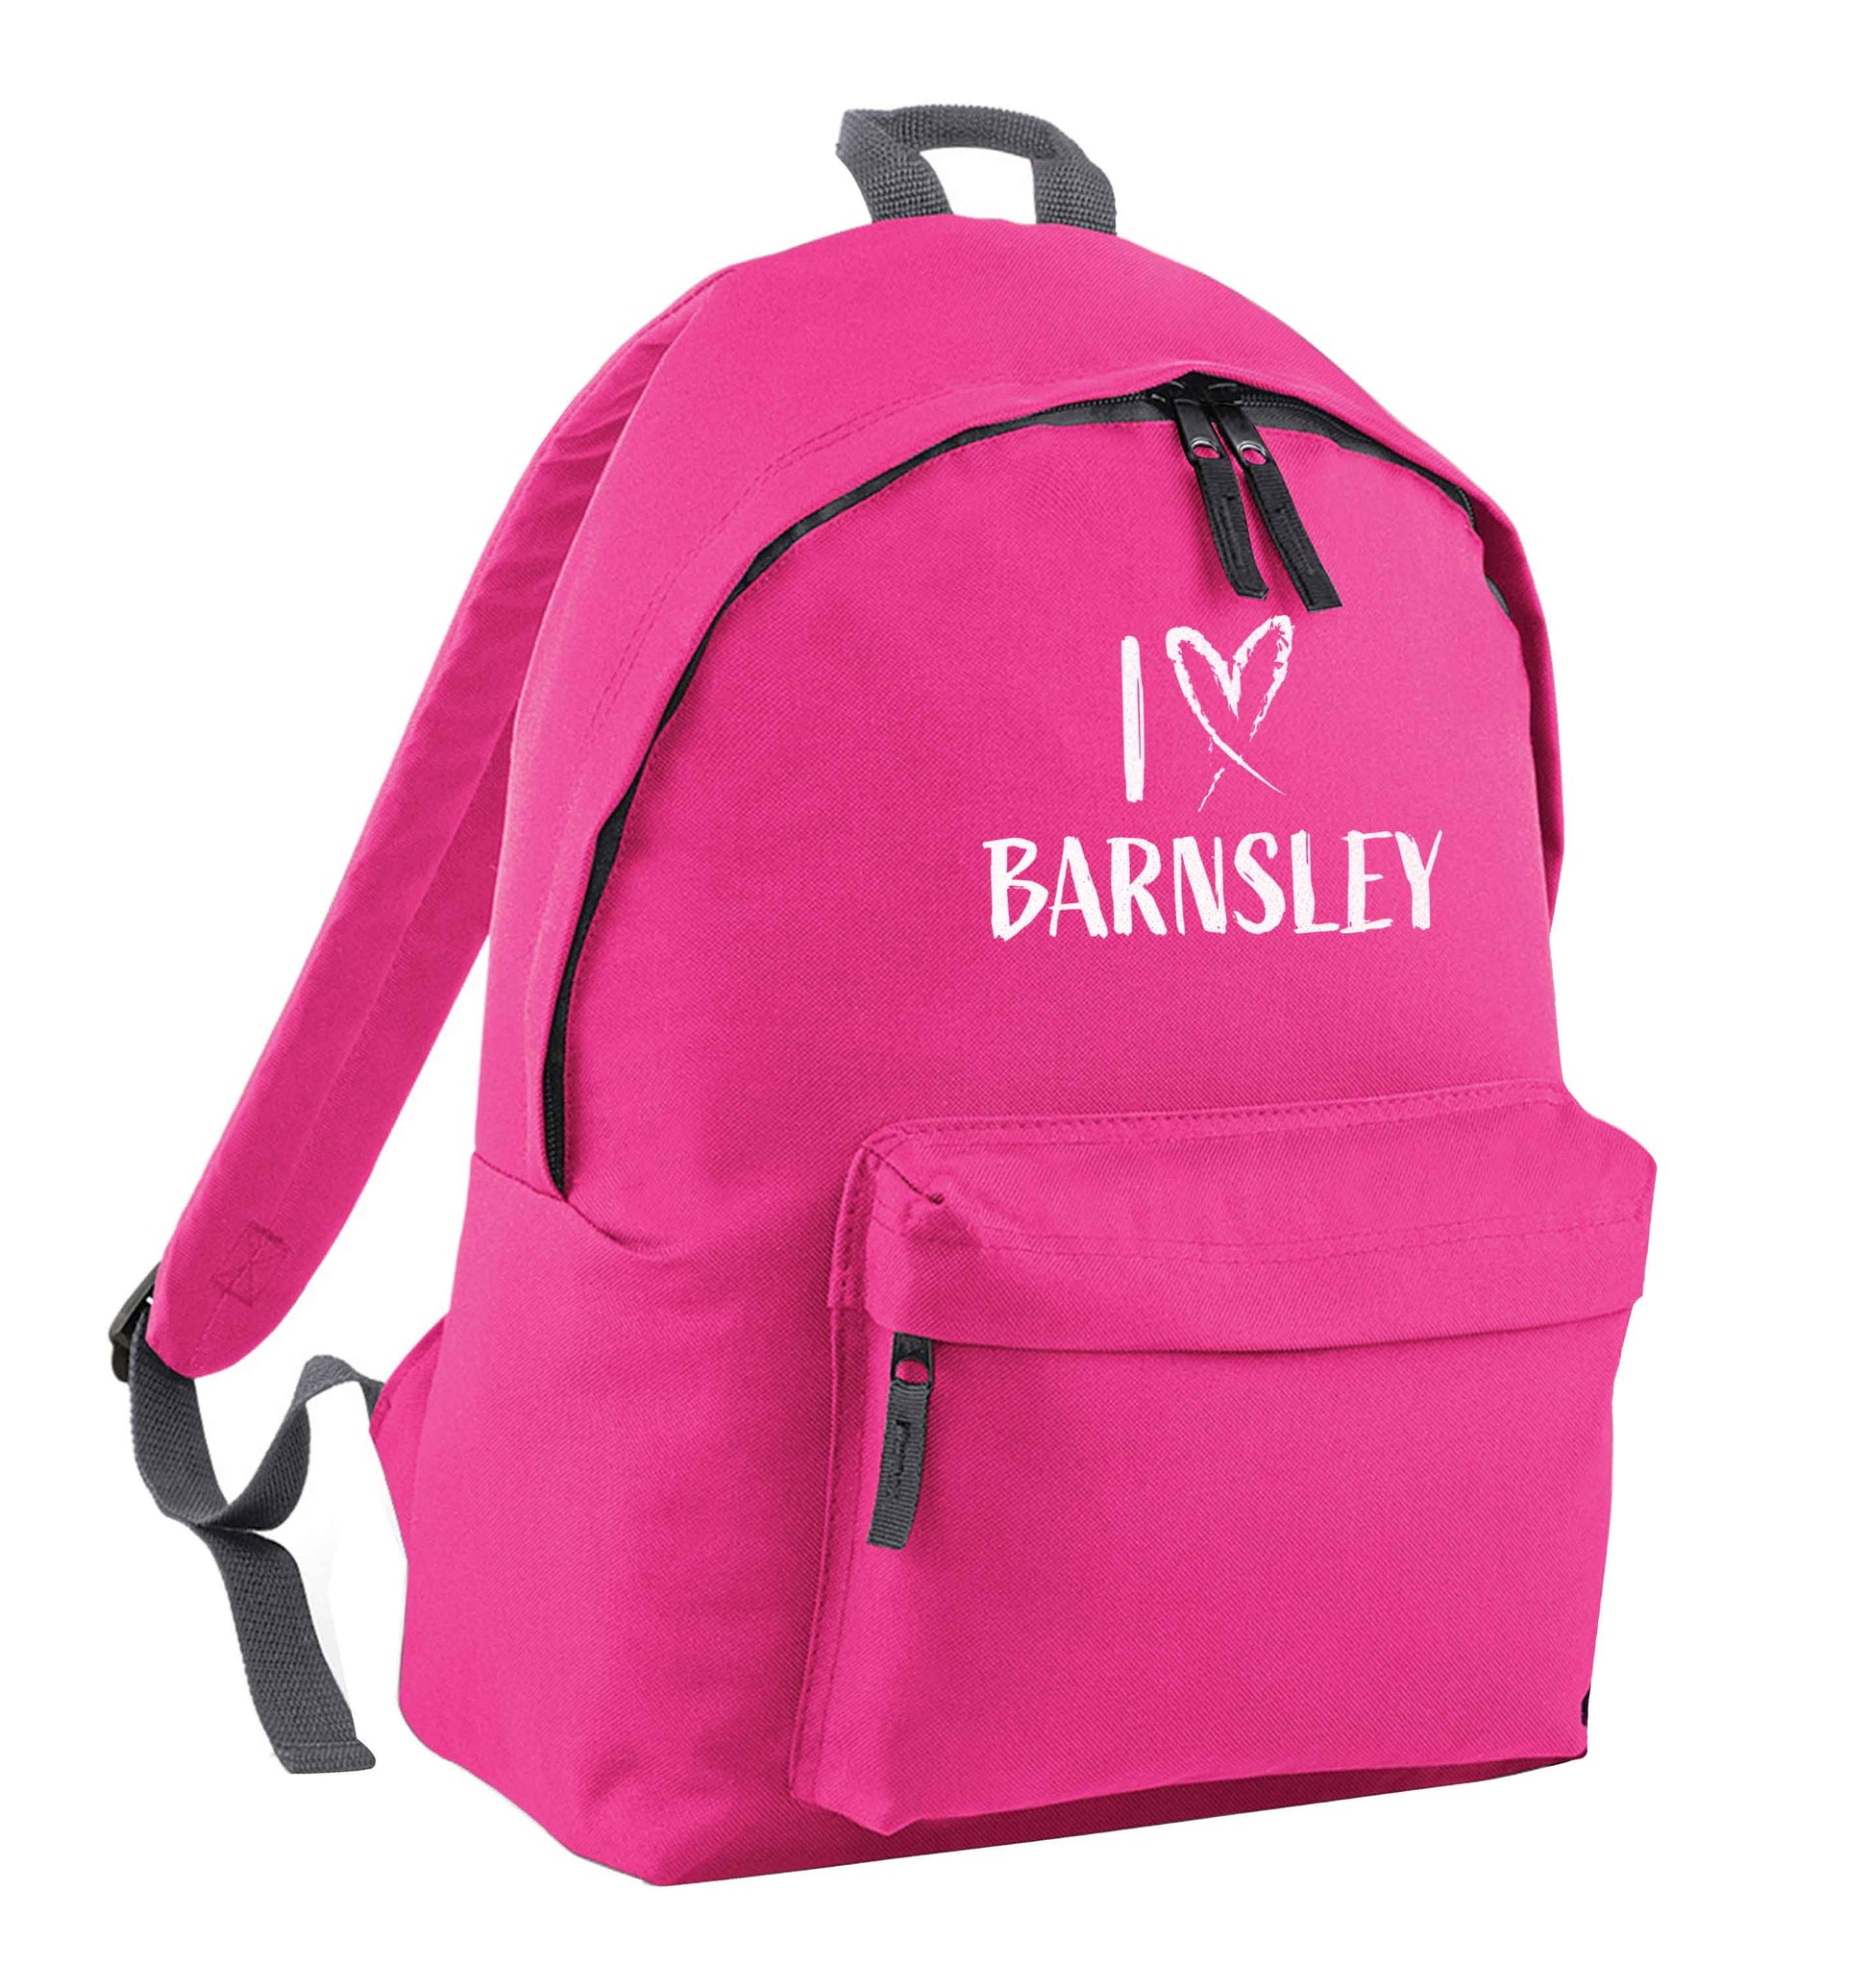 I love Barnsley pink children's backpack